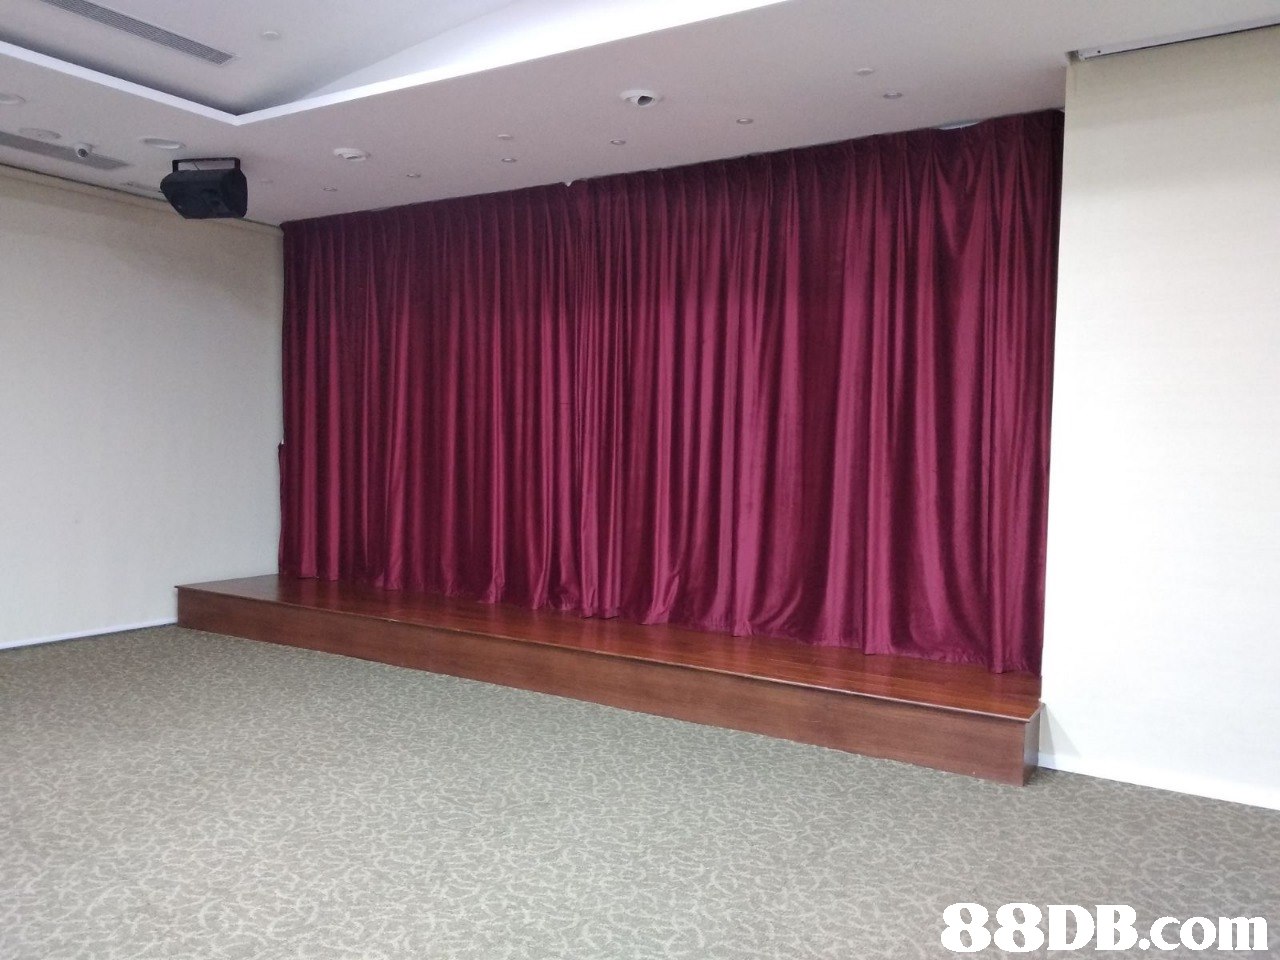 8DB.com  property,curtain,room,interior design,window covering